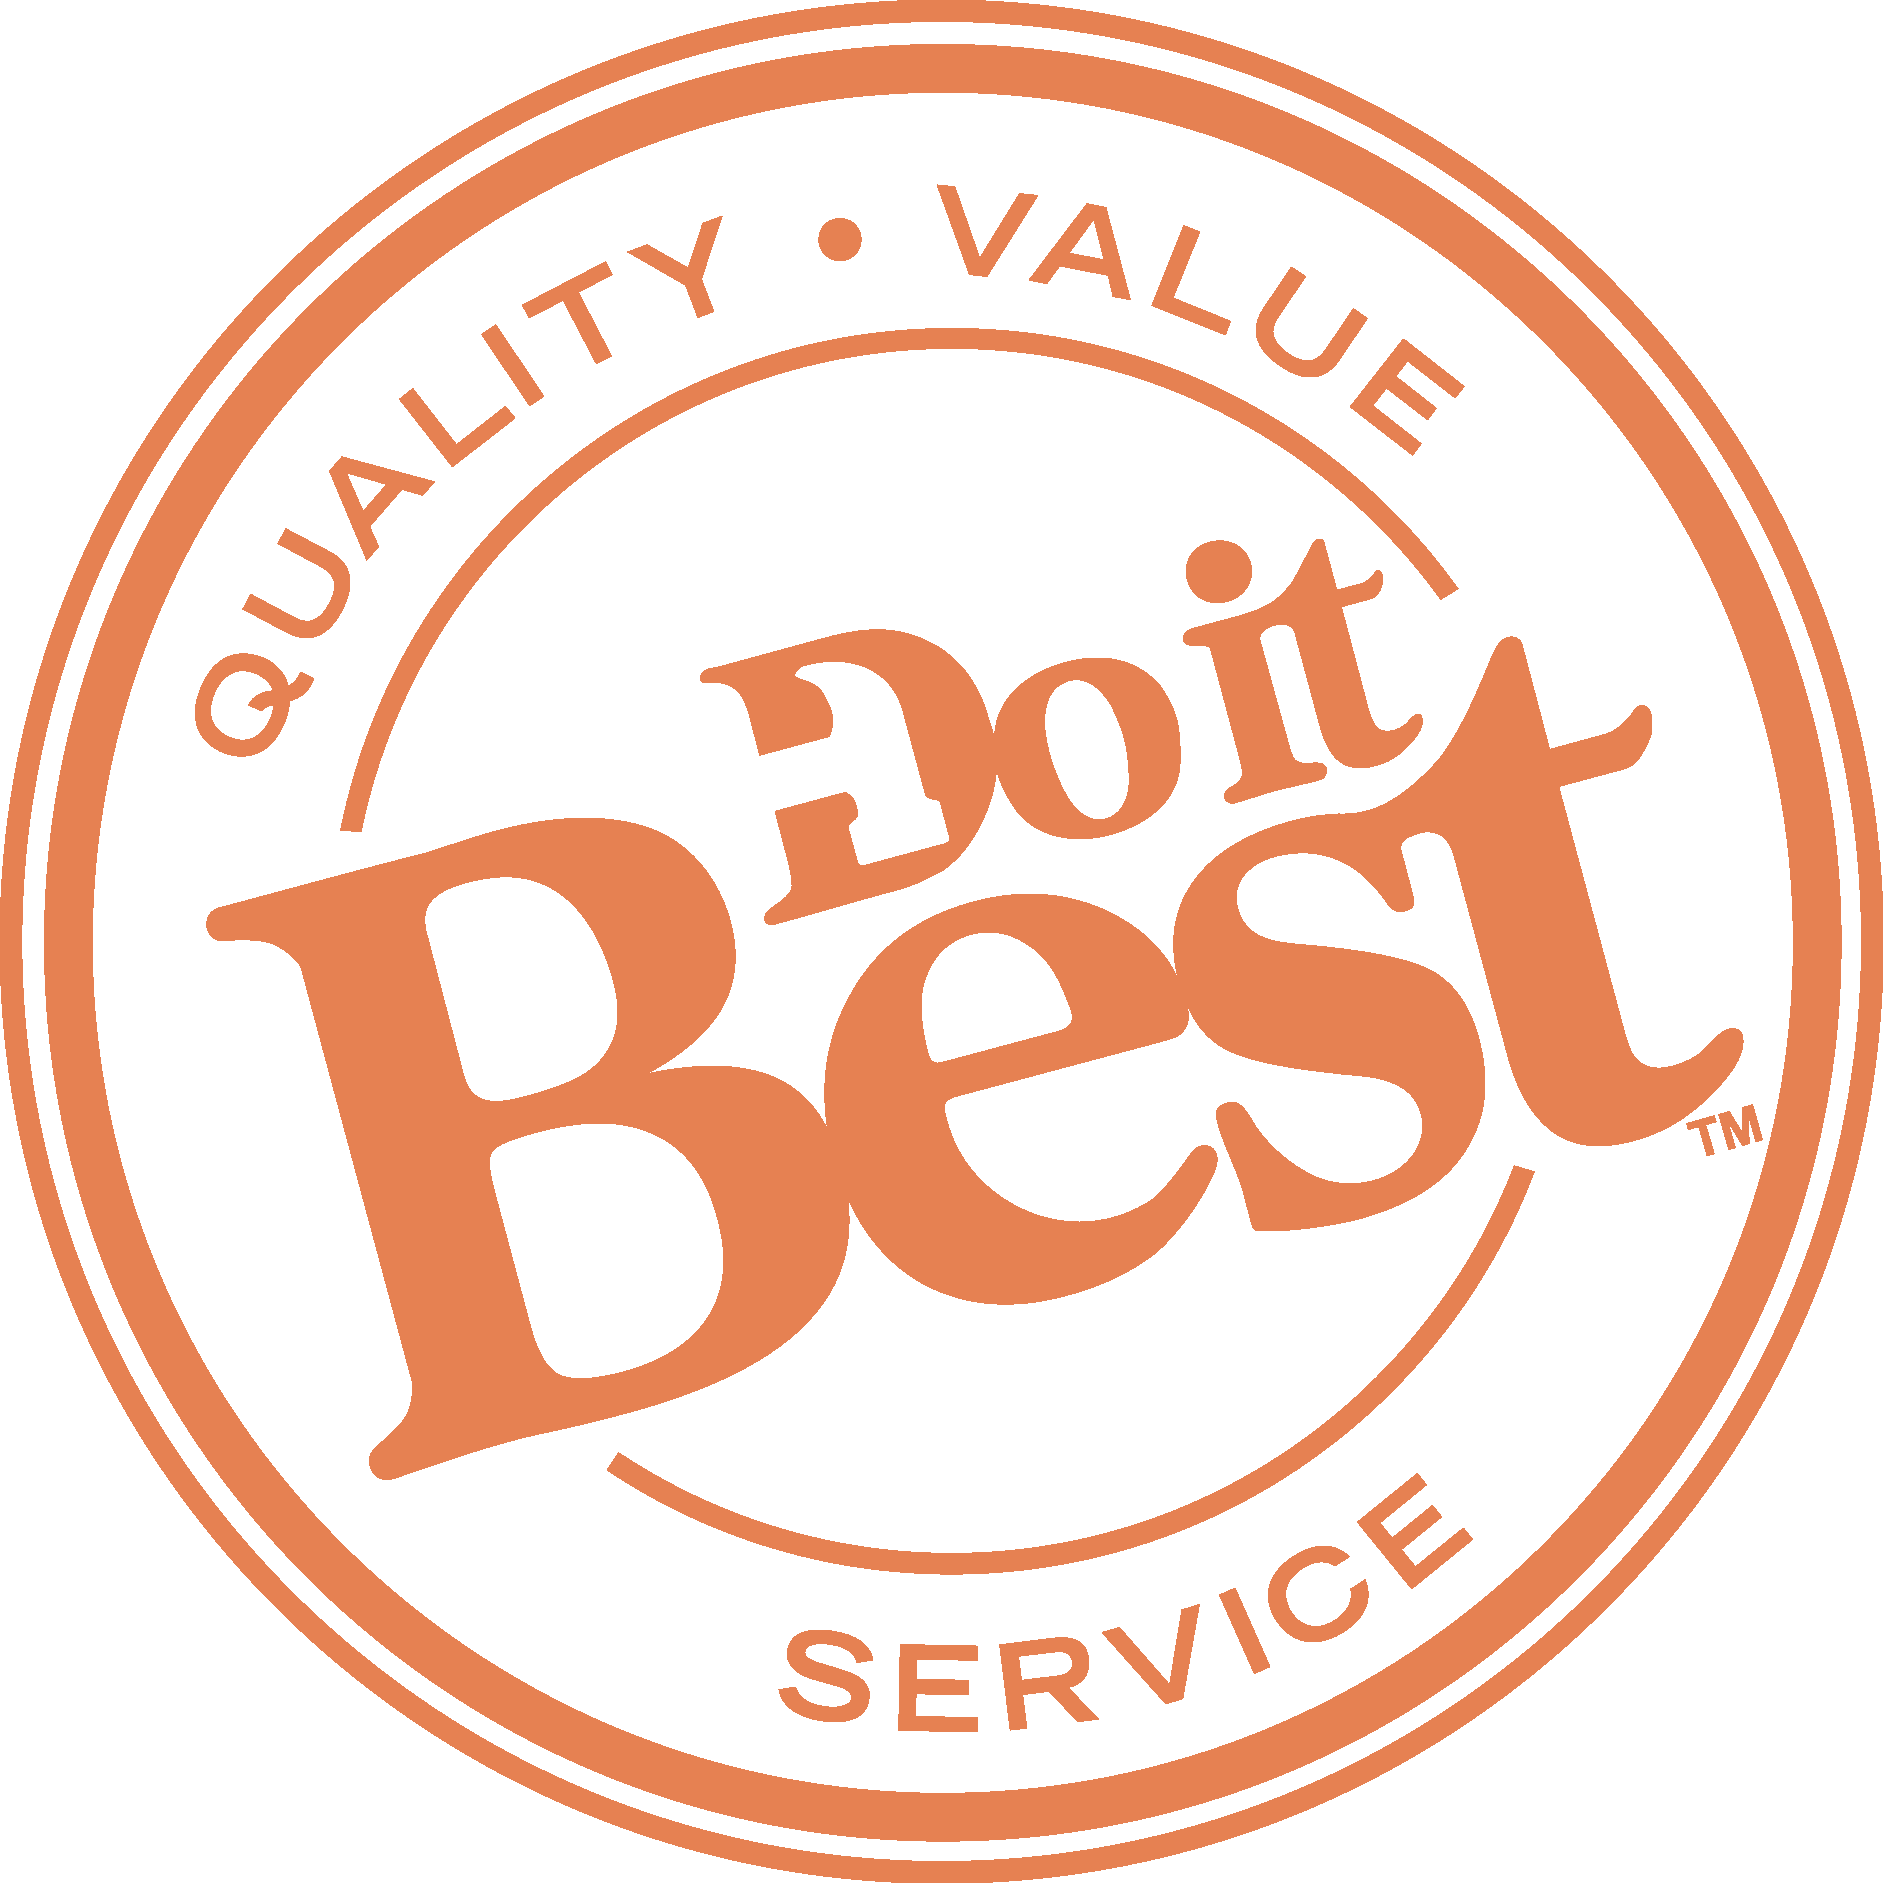 Quality value. Qualita лого. Best quality logo. Best quality logo vector.